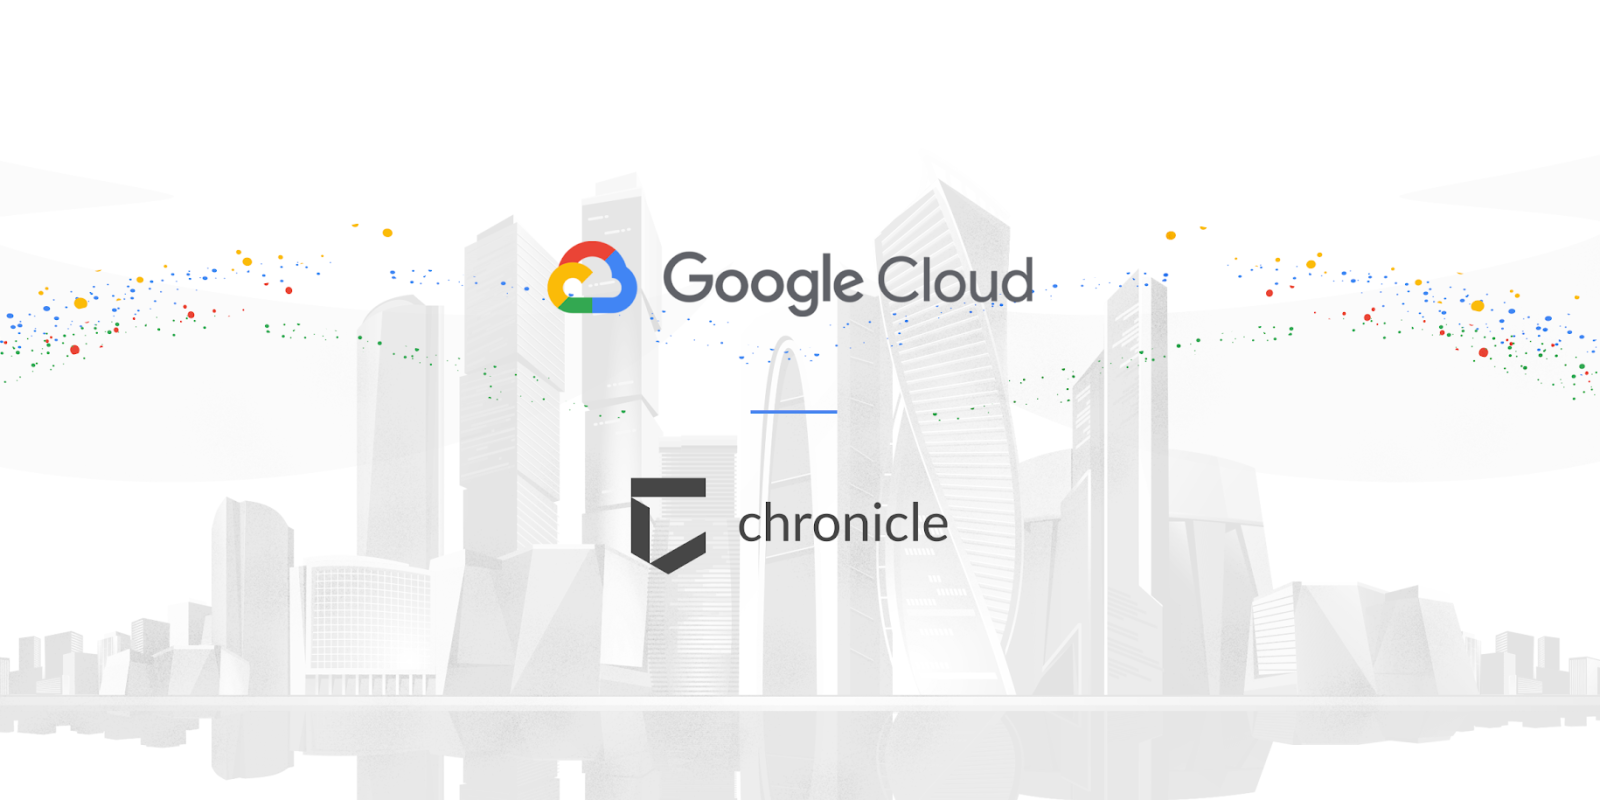 Google Cloud Chronicle